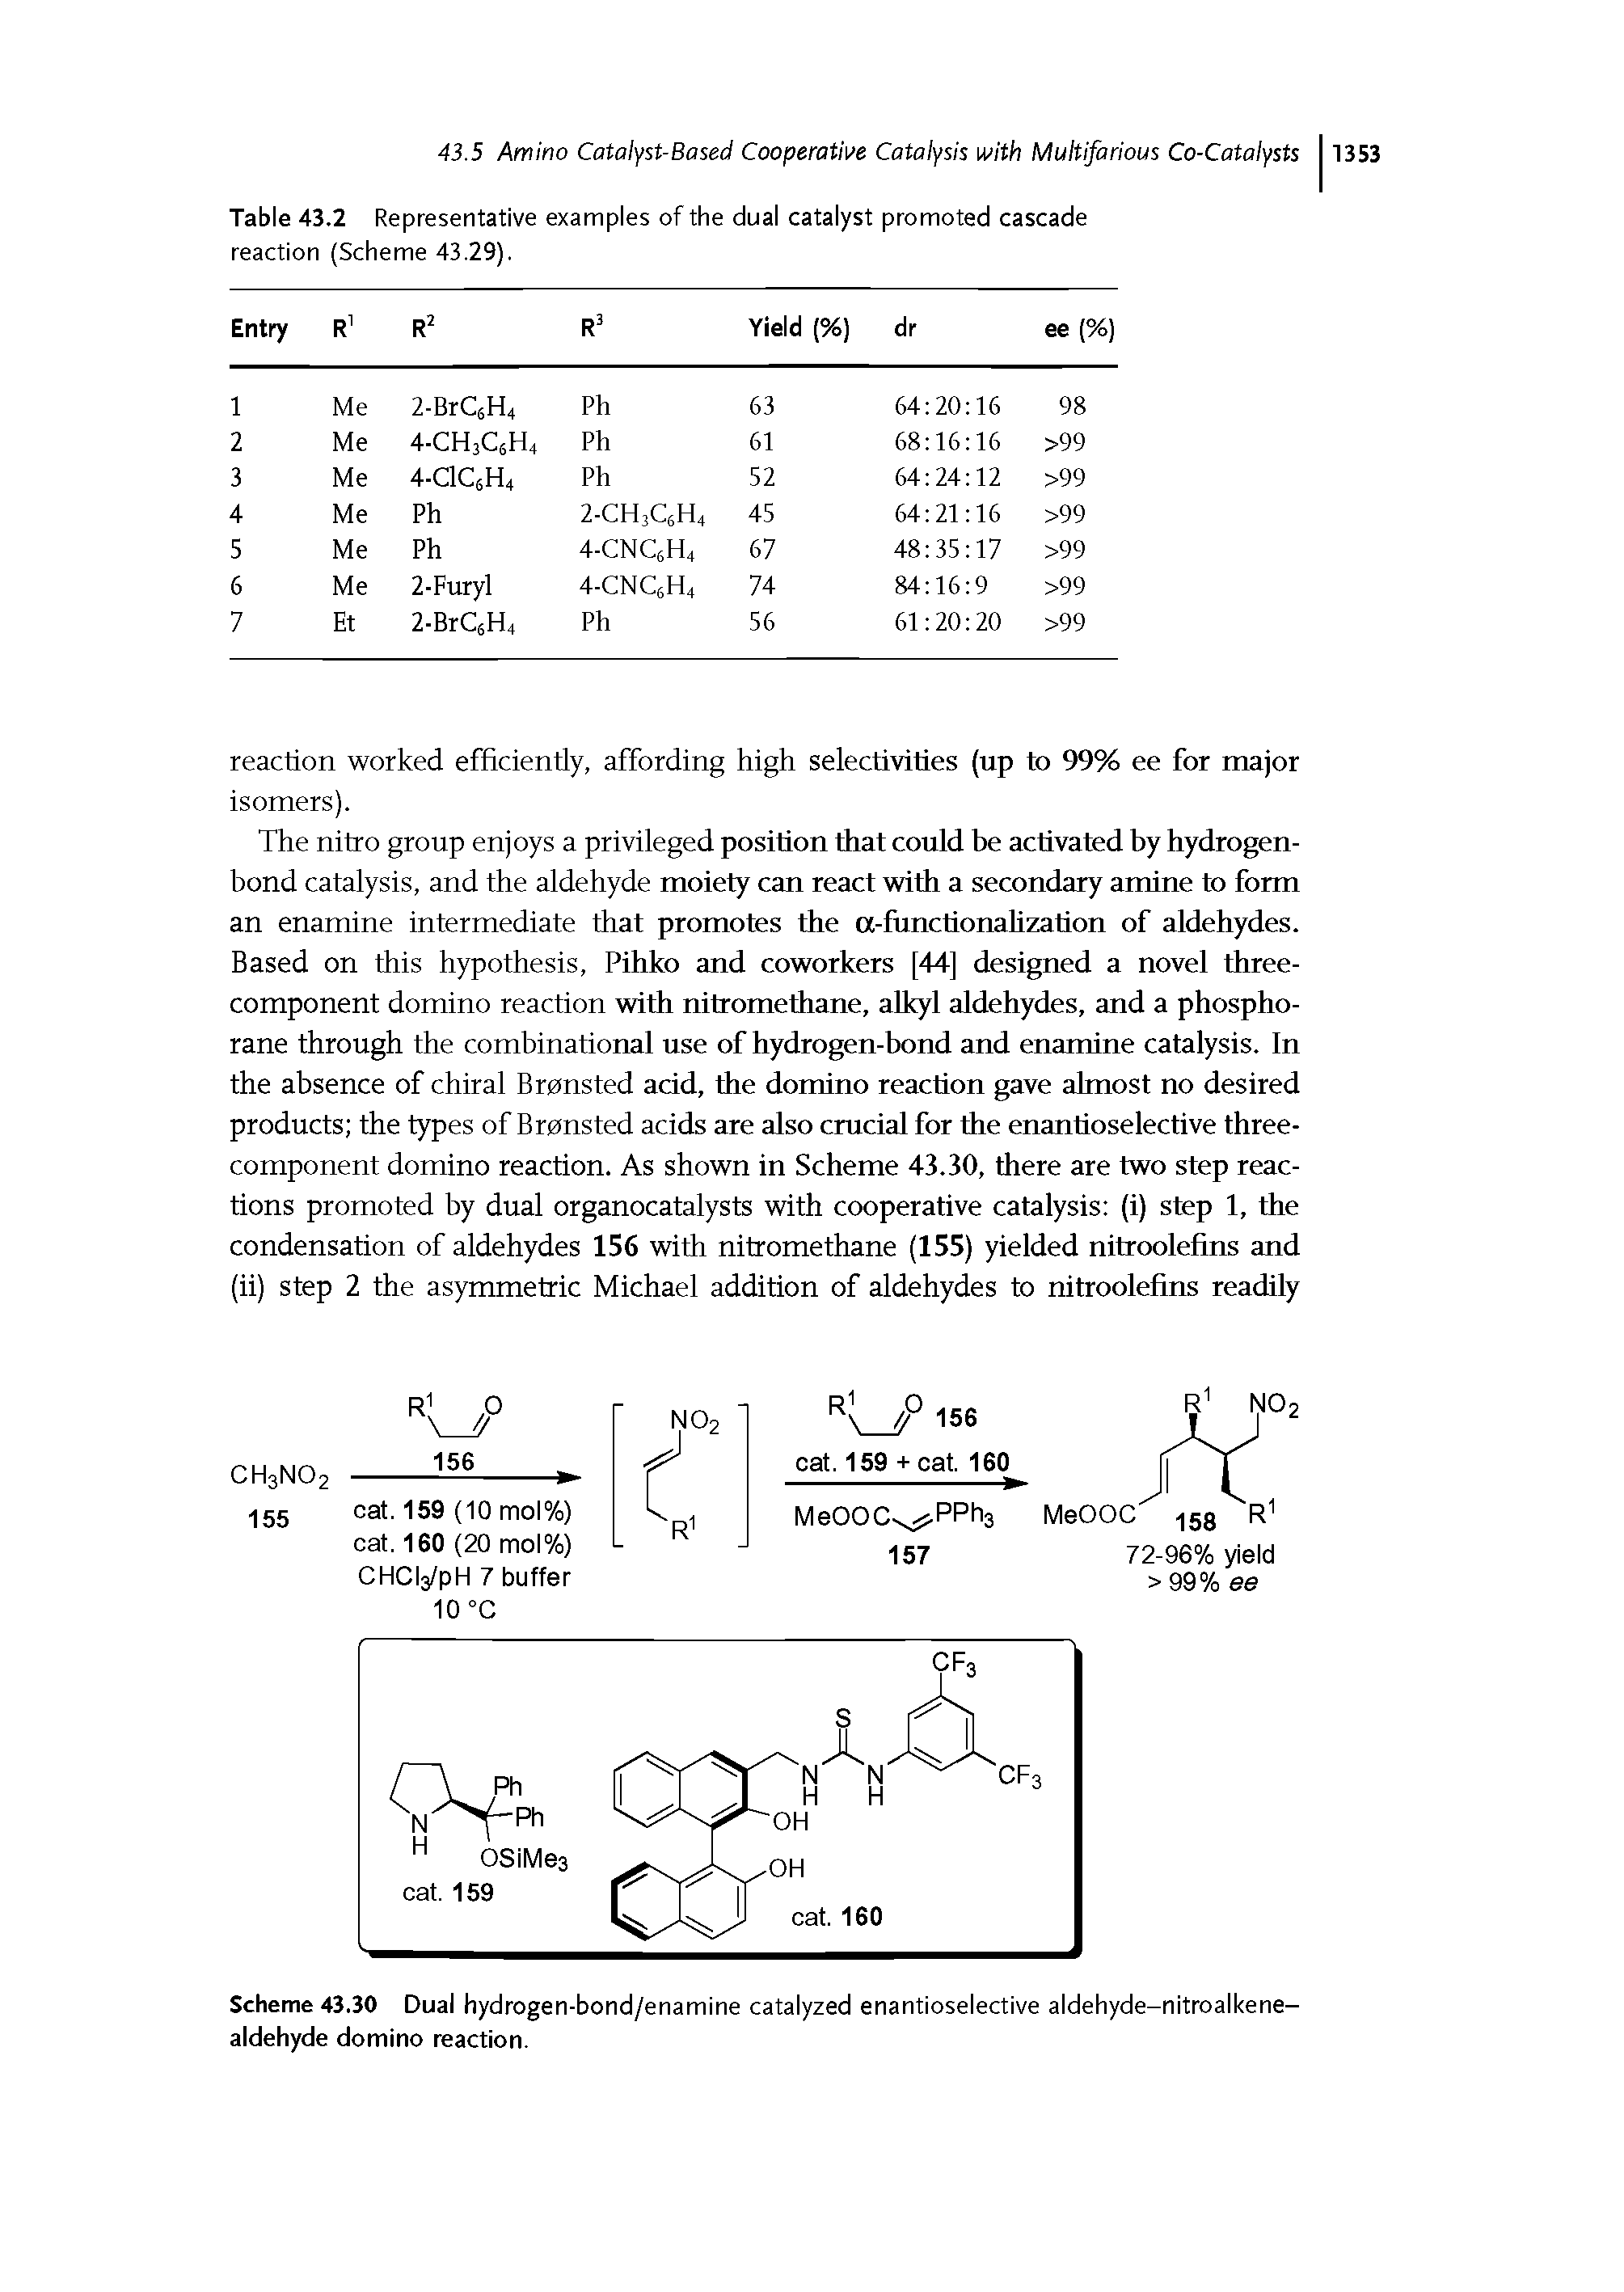 Scheme 43.30 Dual hydrogen-bond/enamine catalyzed enantioselective aldehyde-nitroalkene-aldehyde domino reaction.